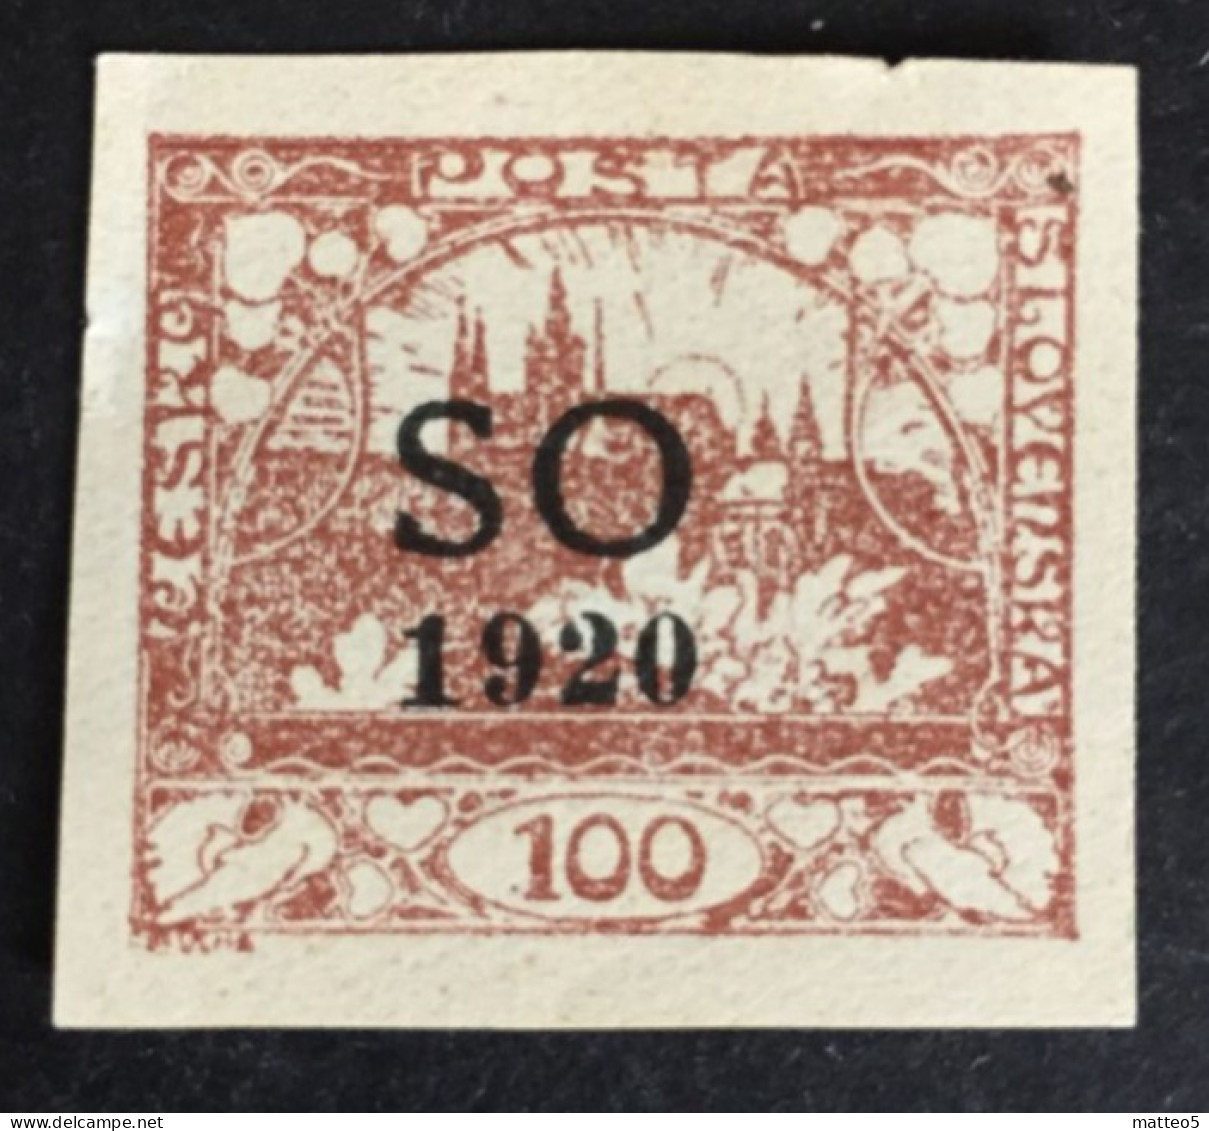 1920 Poland Eastern Silesia Czechoslovakia - Hradcany At Prague Overprint SO 100 - Unused ( Mint Hinged) - Silesia